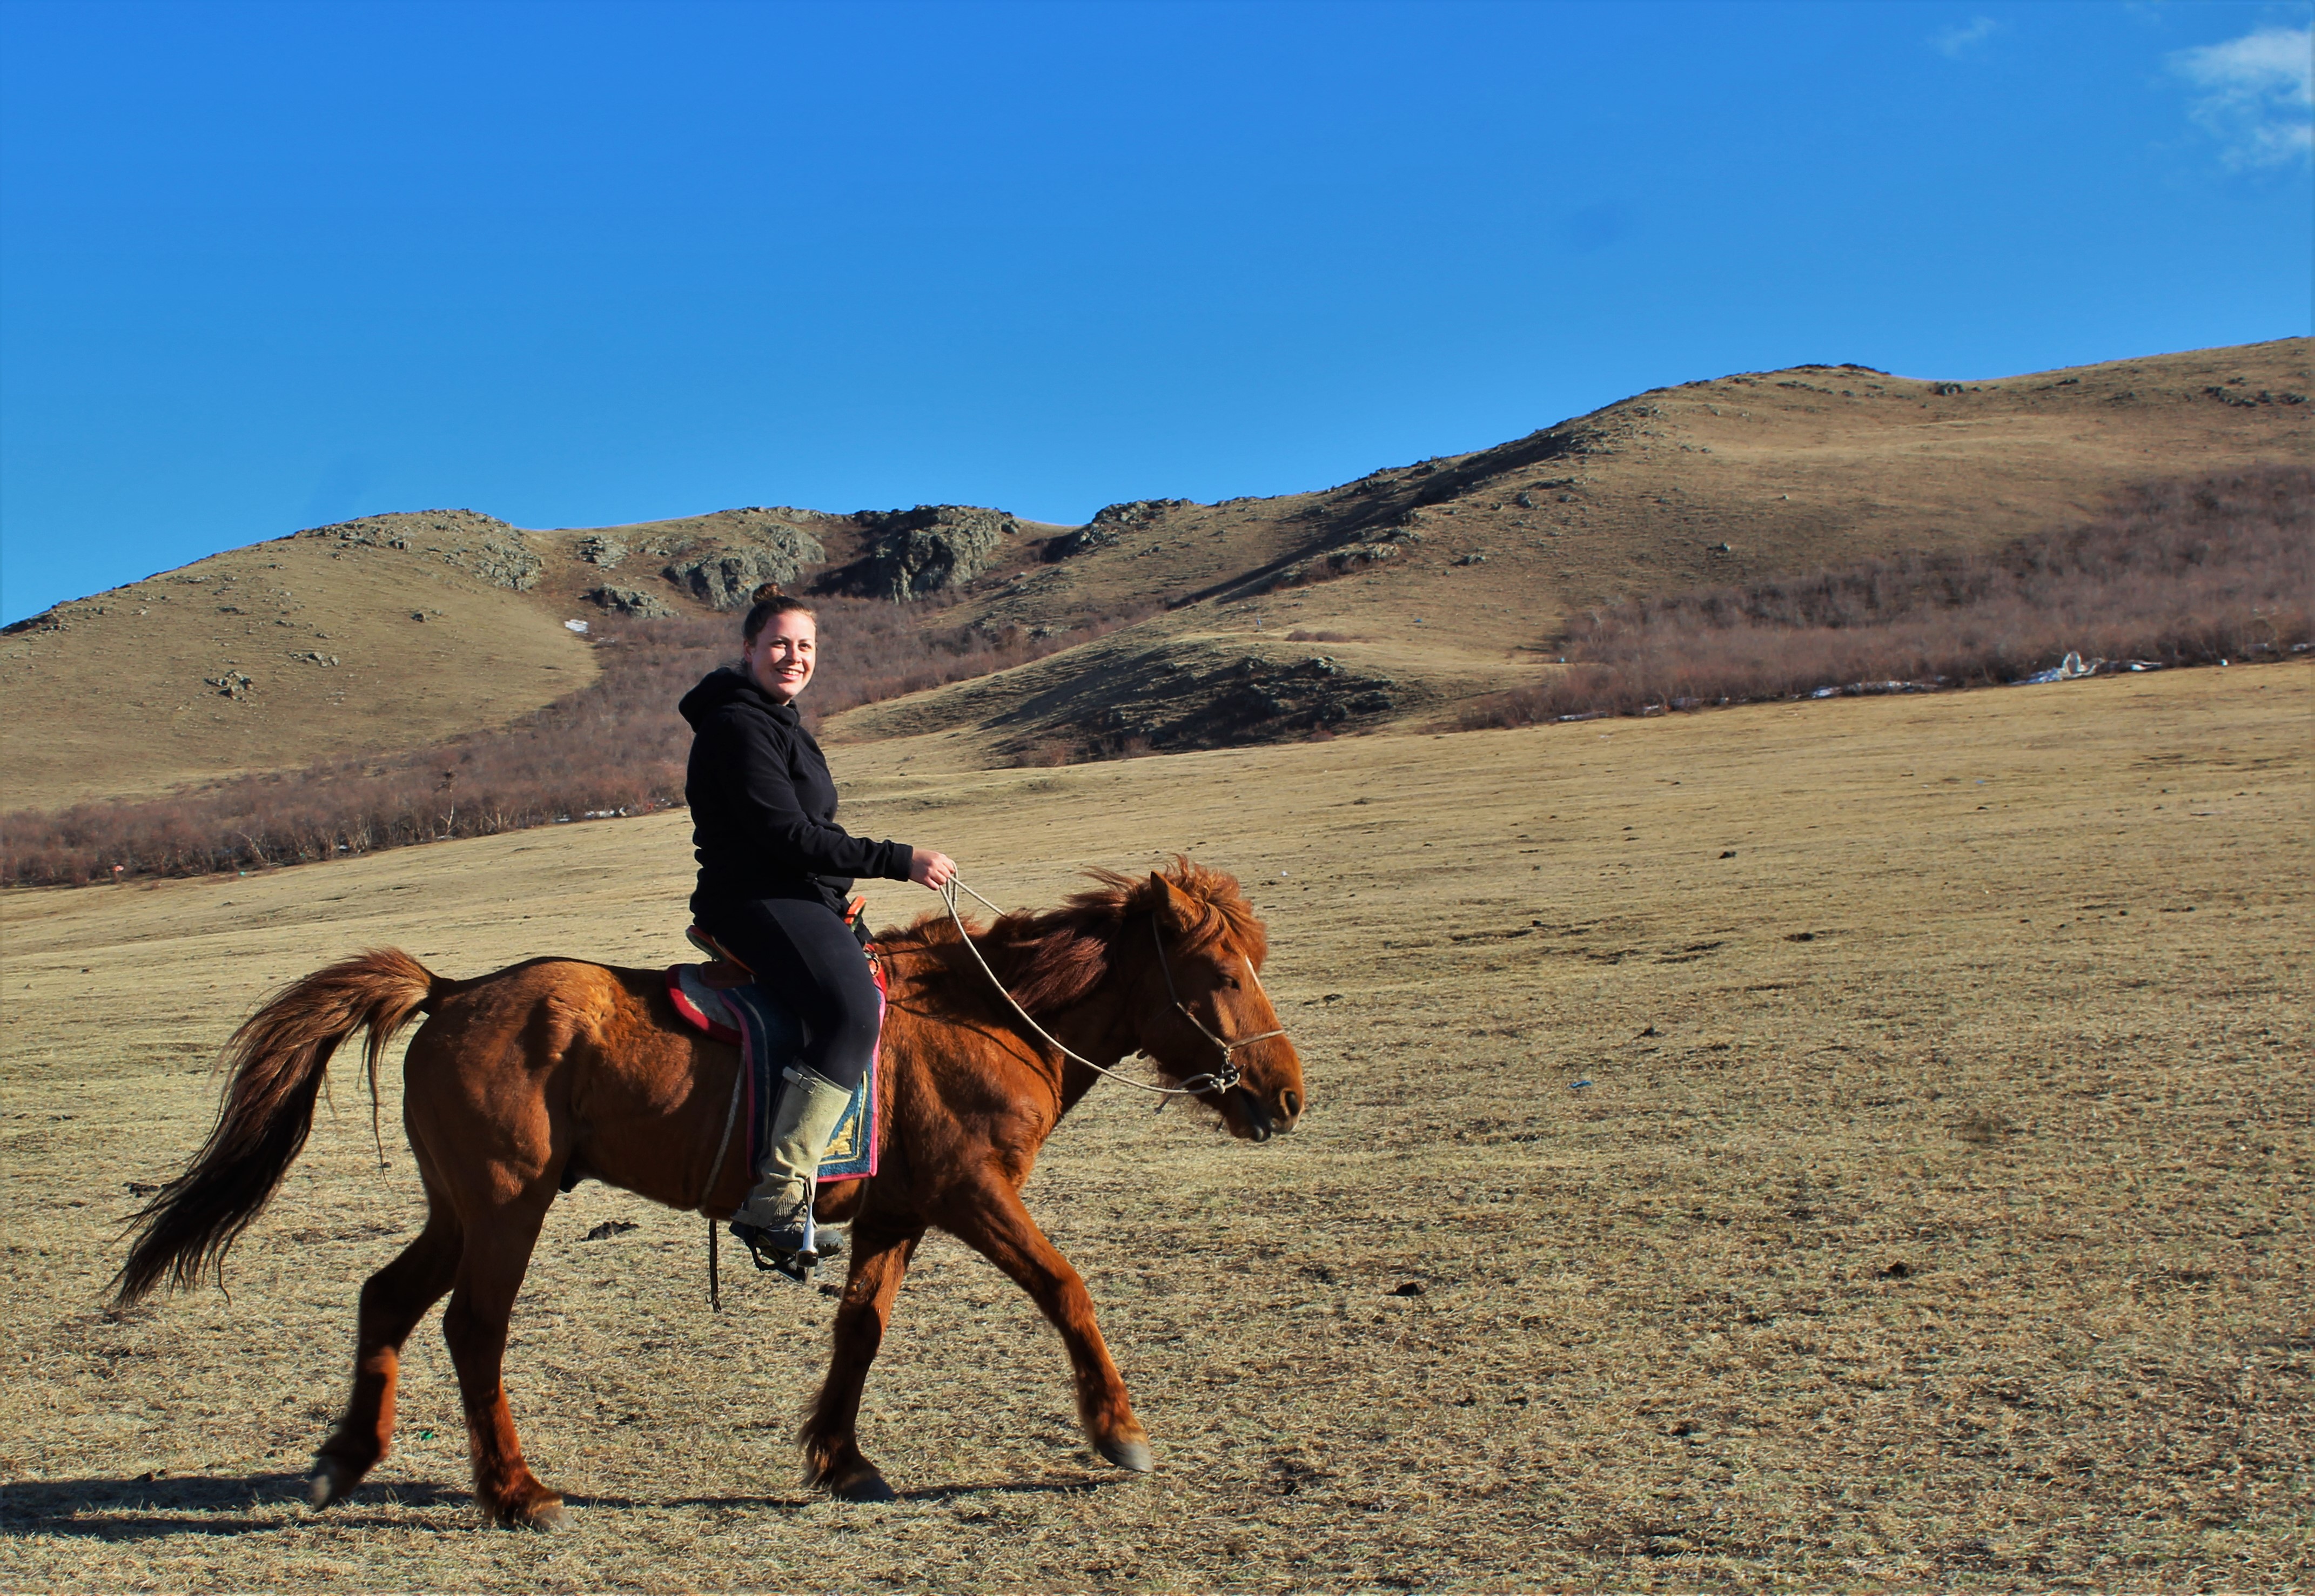 Long Journey Home - snapshots so far. Me riding a horse!